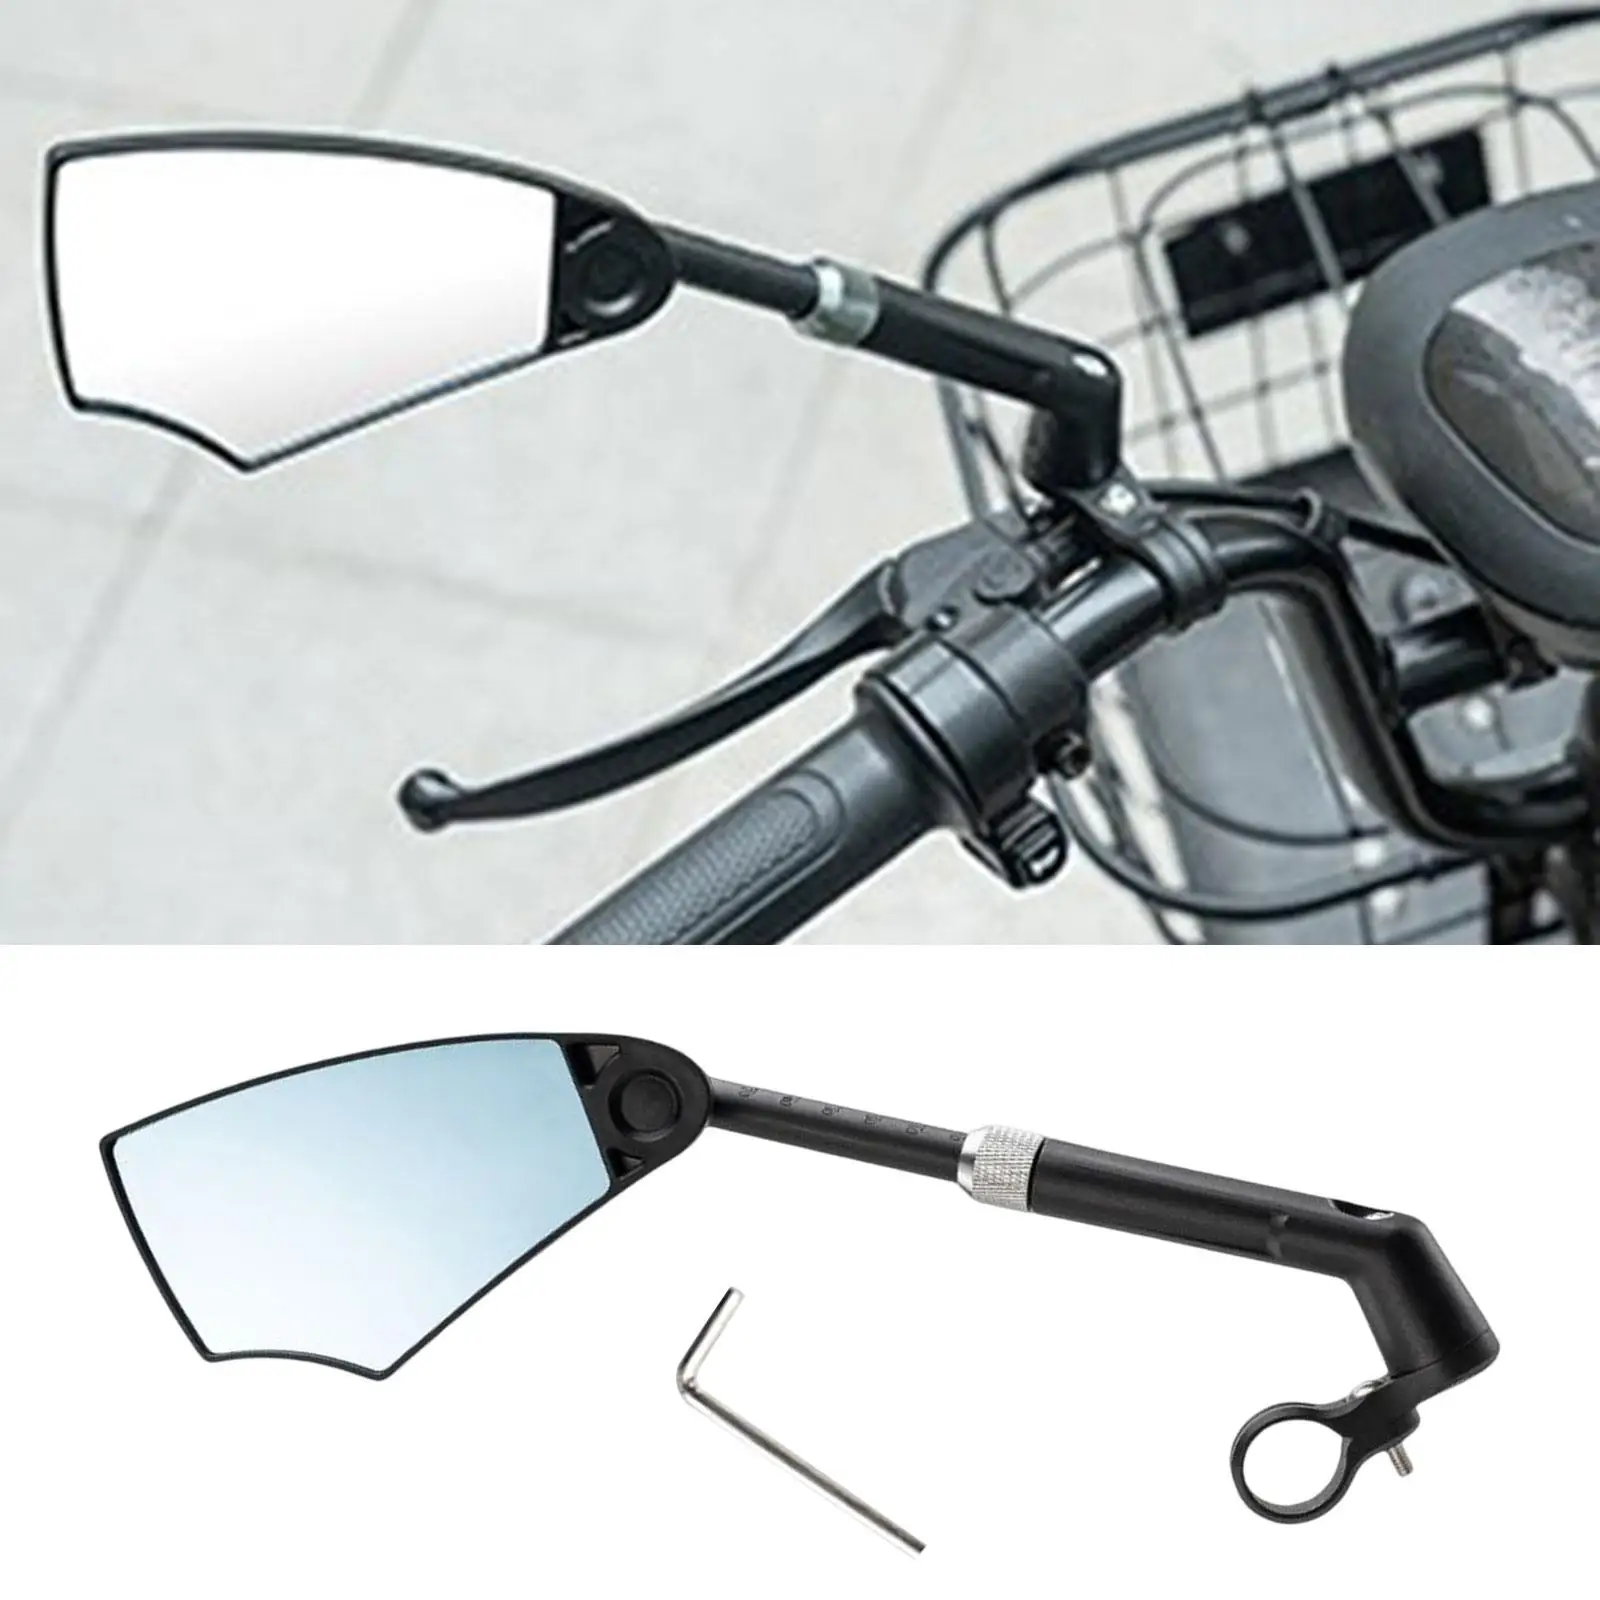 Bike Rear View Mirror Handlebar Long Universal Bike Mirror Bike Rearview Mirror for Modification Scooter Motorcycle Adult Riding